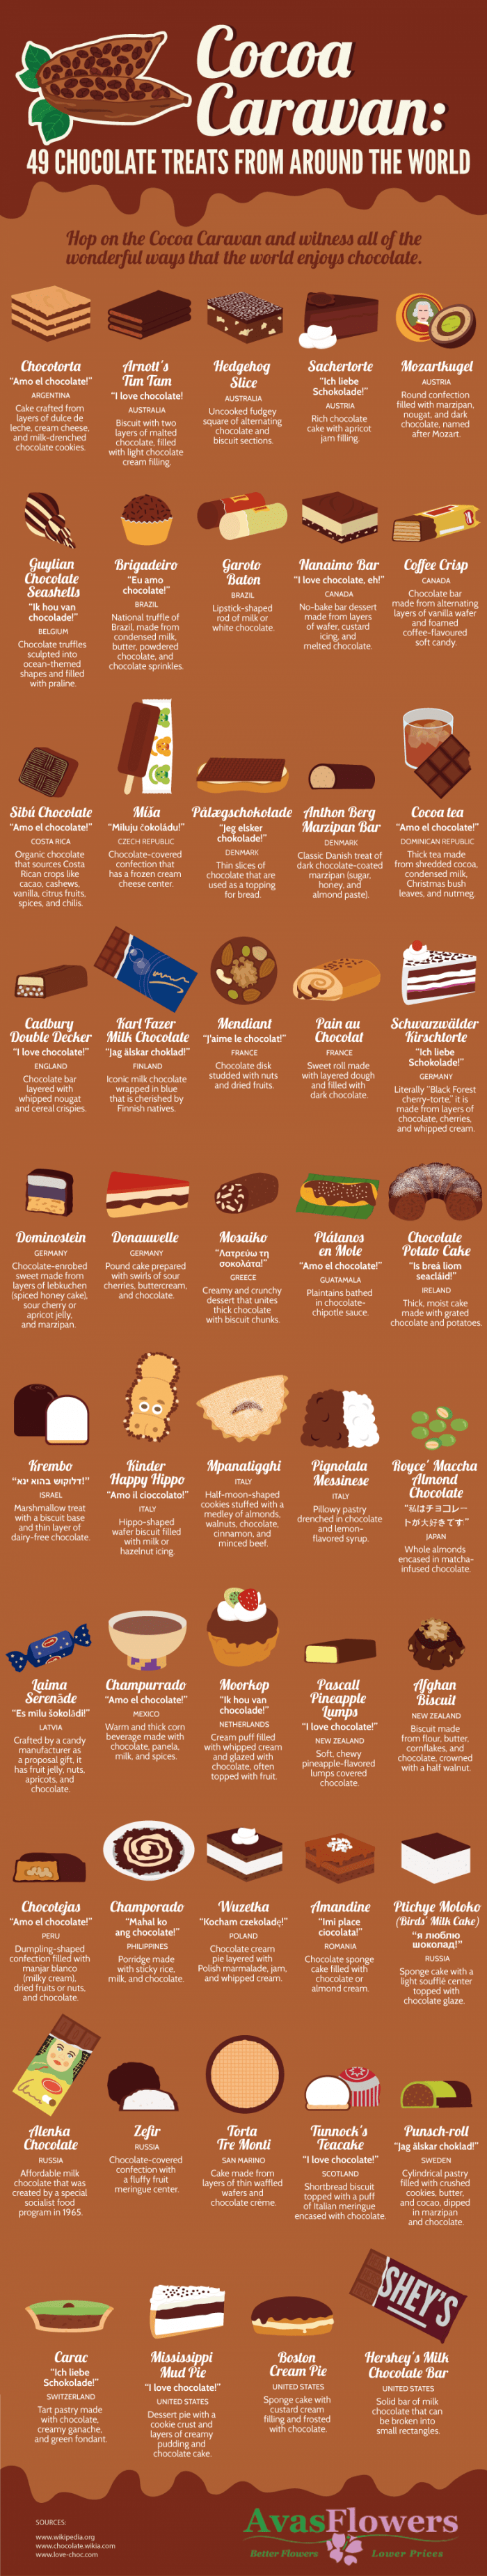 49 Chocolate Treats